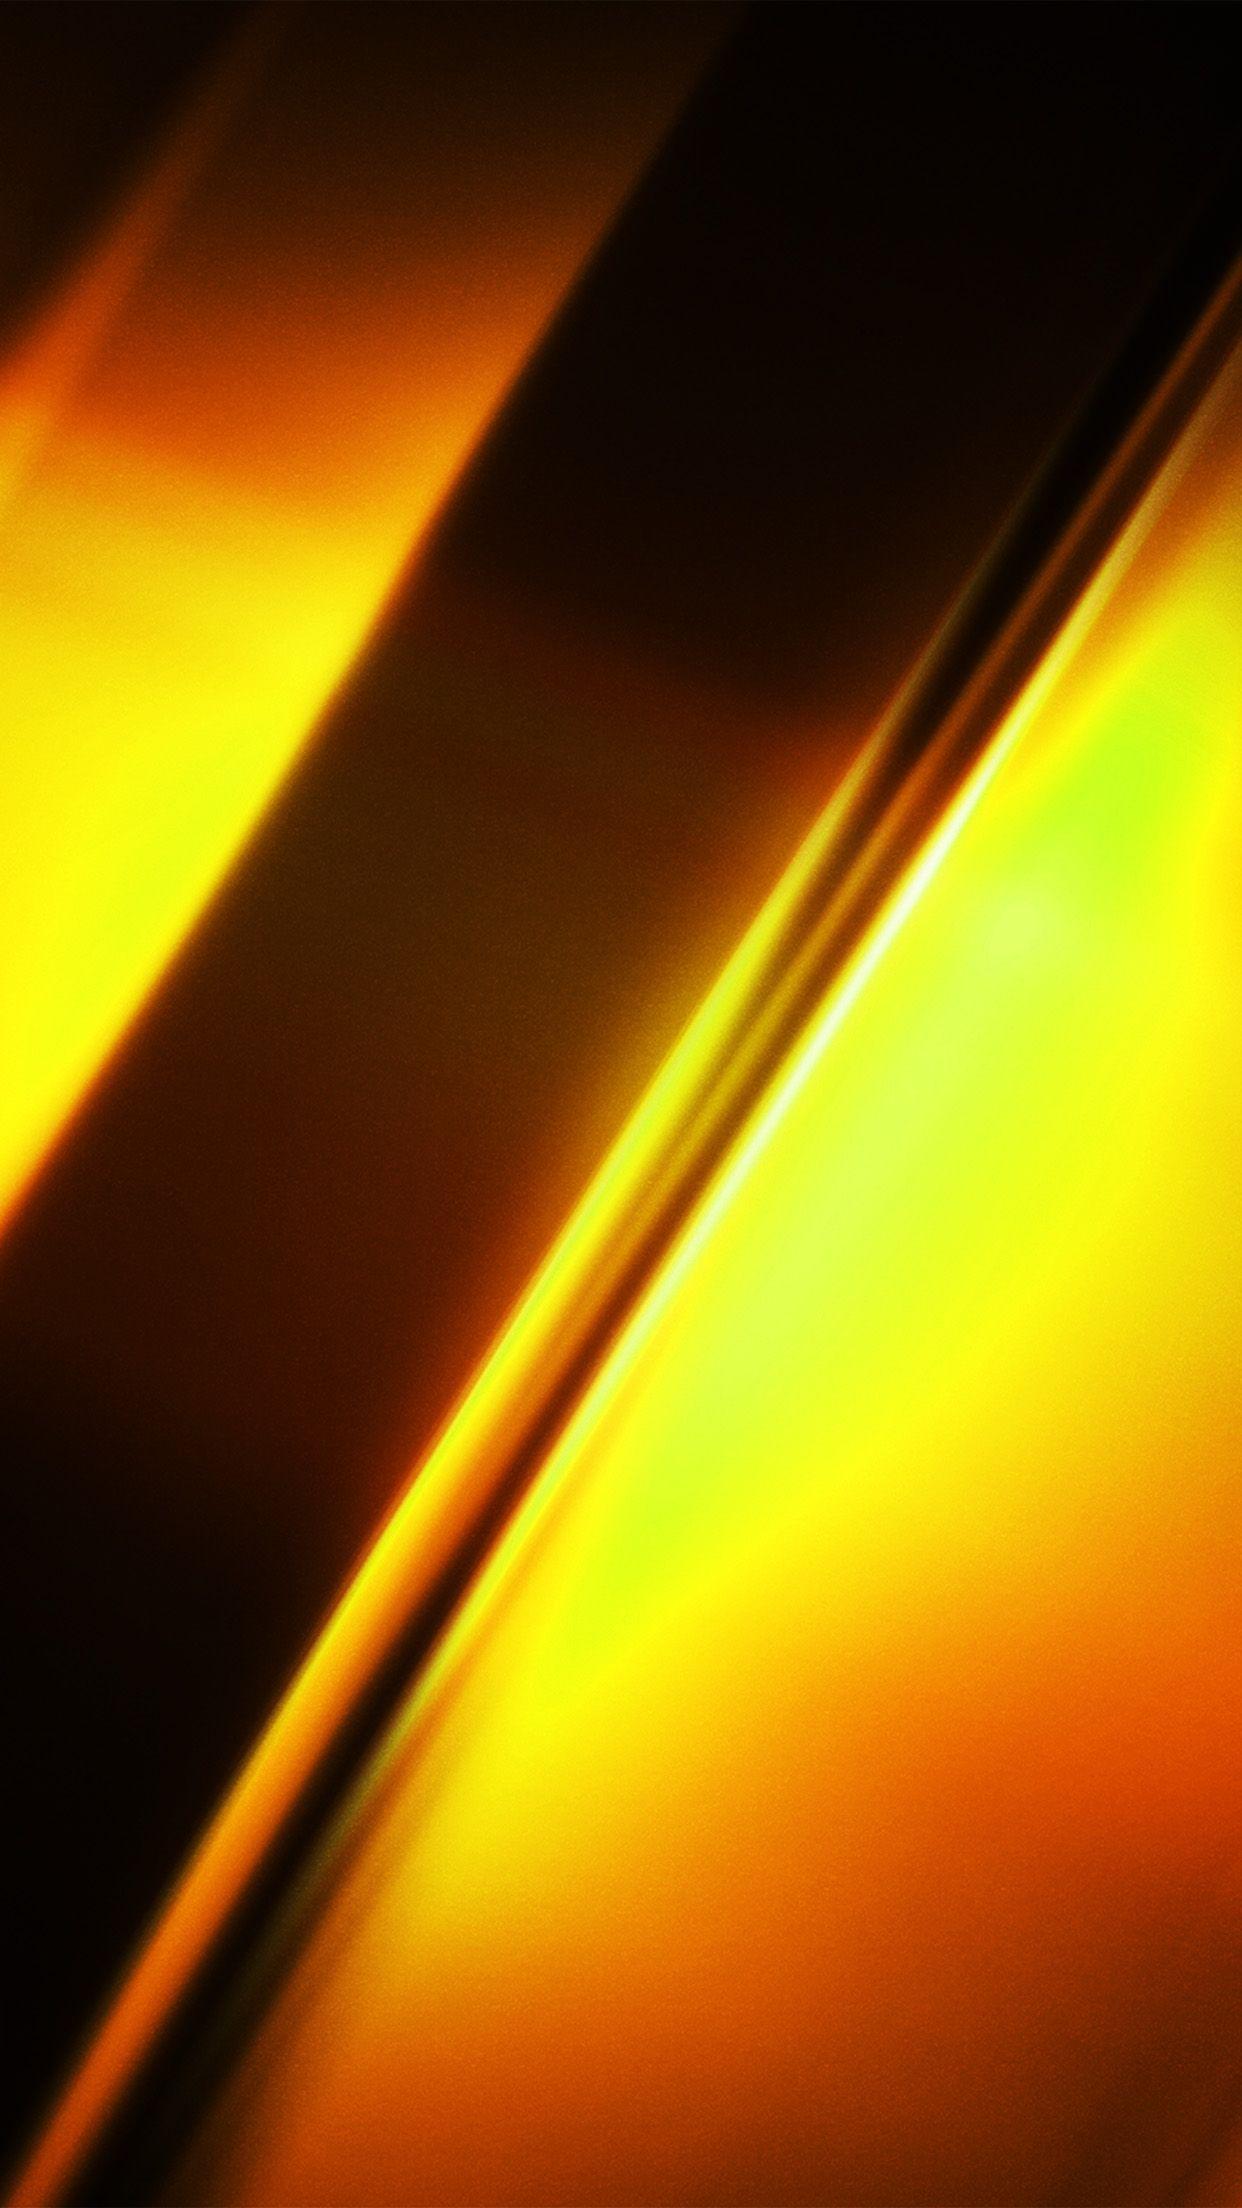 iPhone 8 wallpaper. line gold yellow blur